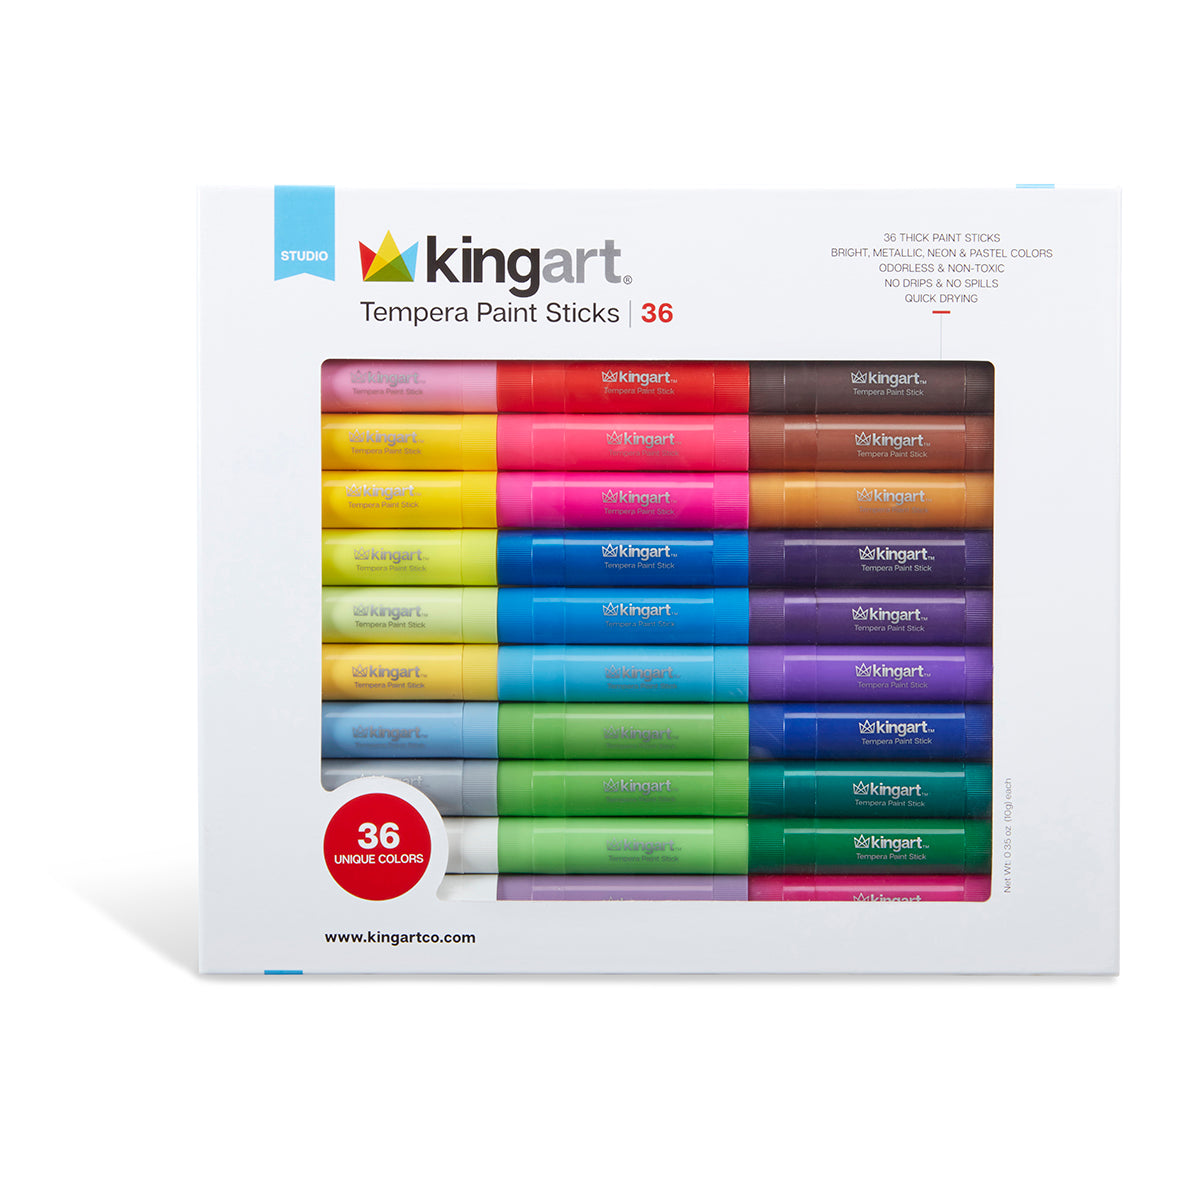 Kwik Stix Solid Tempera Paint Sticks 24/Pkg-Classic, Metalix, Neon Colors